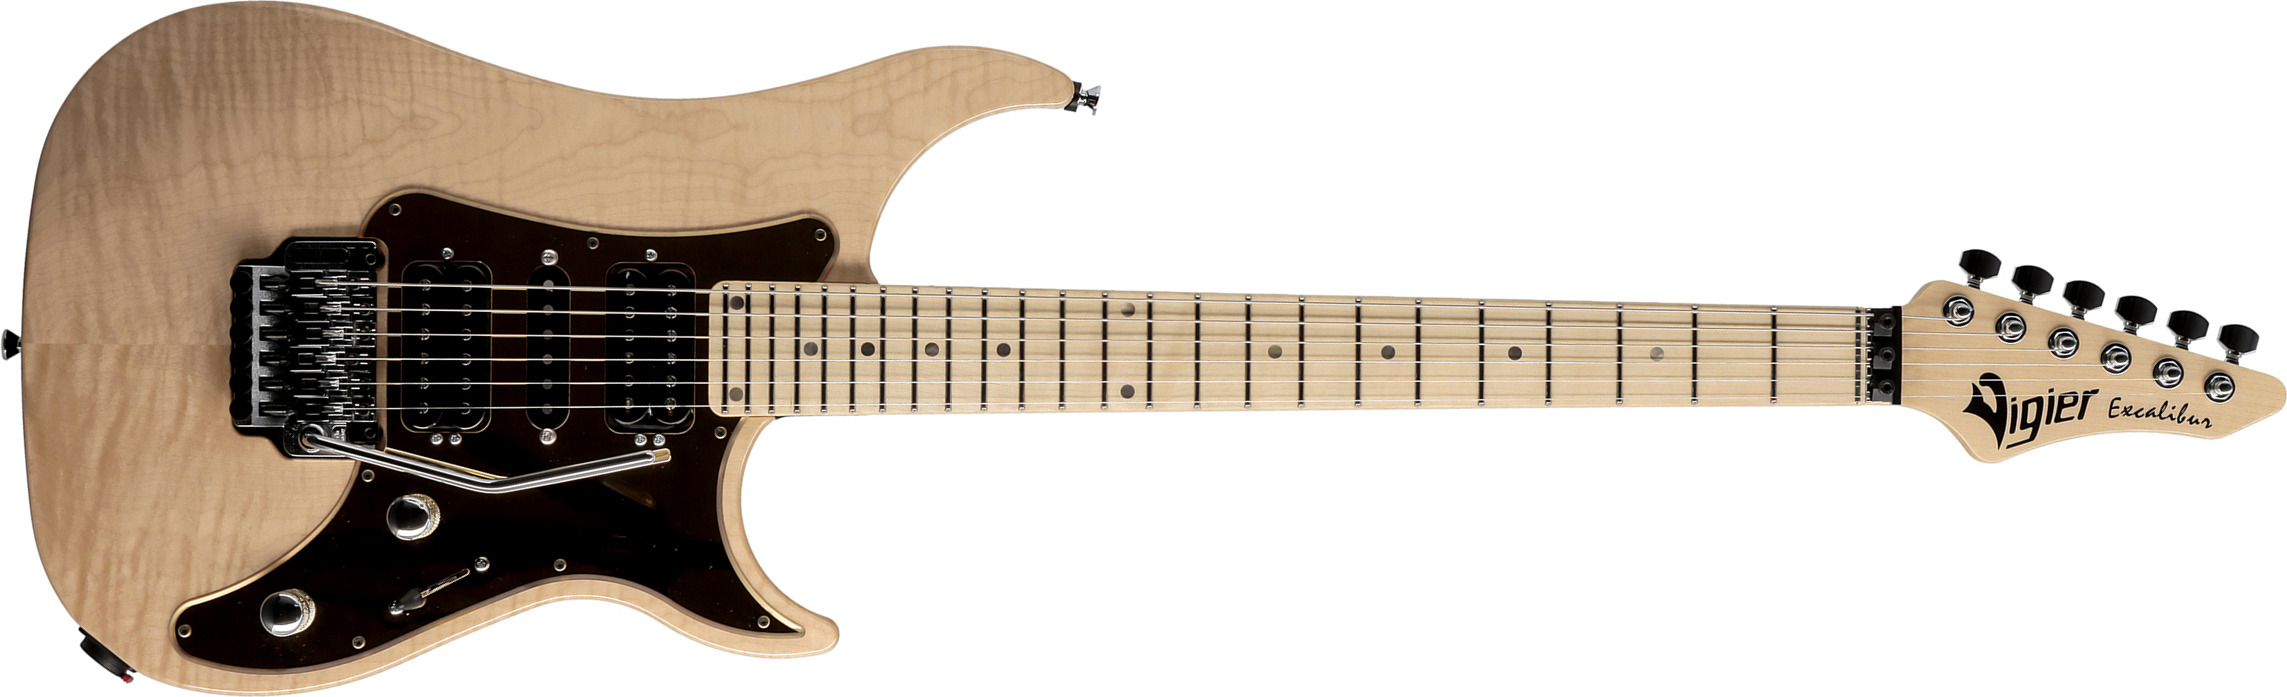 Vigier Excalibur Custom Hsh Fr Mn - Natural Maple - E-Gitarre in Str-Form - Main picture